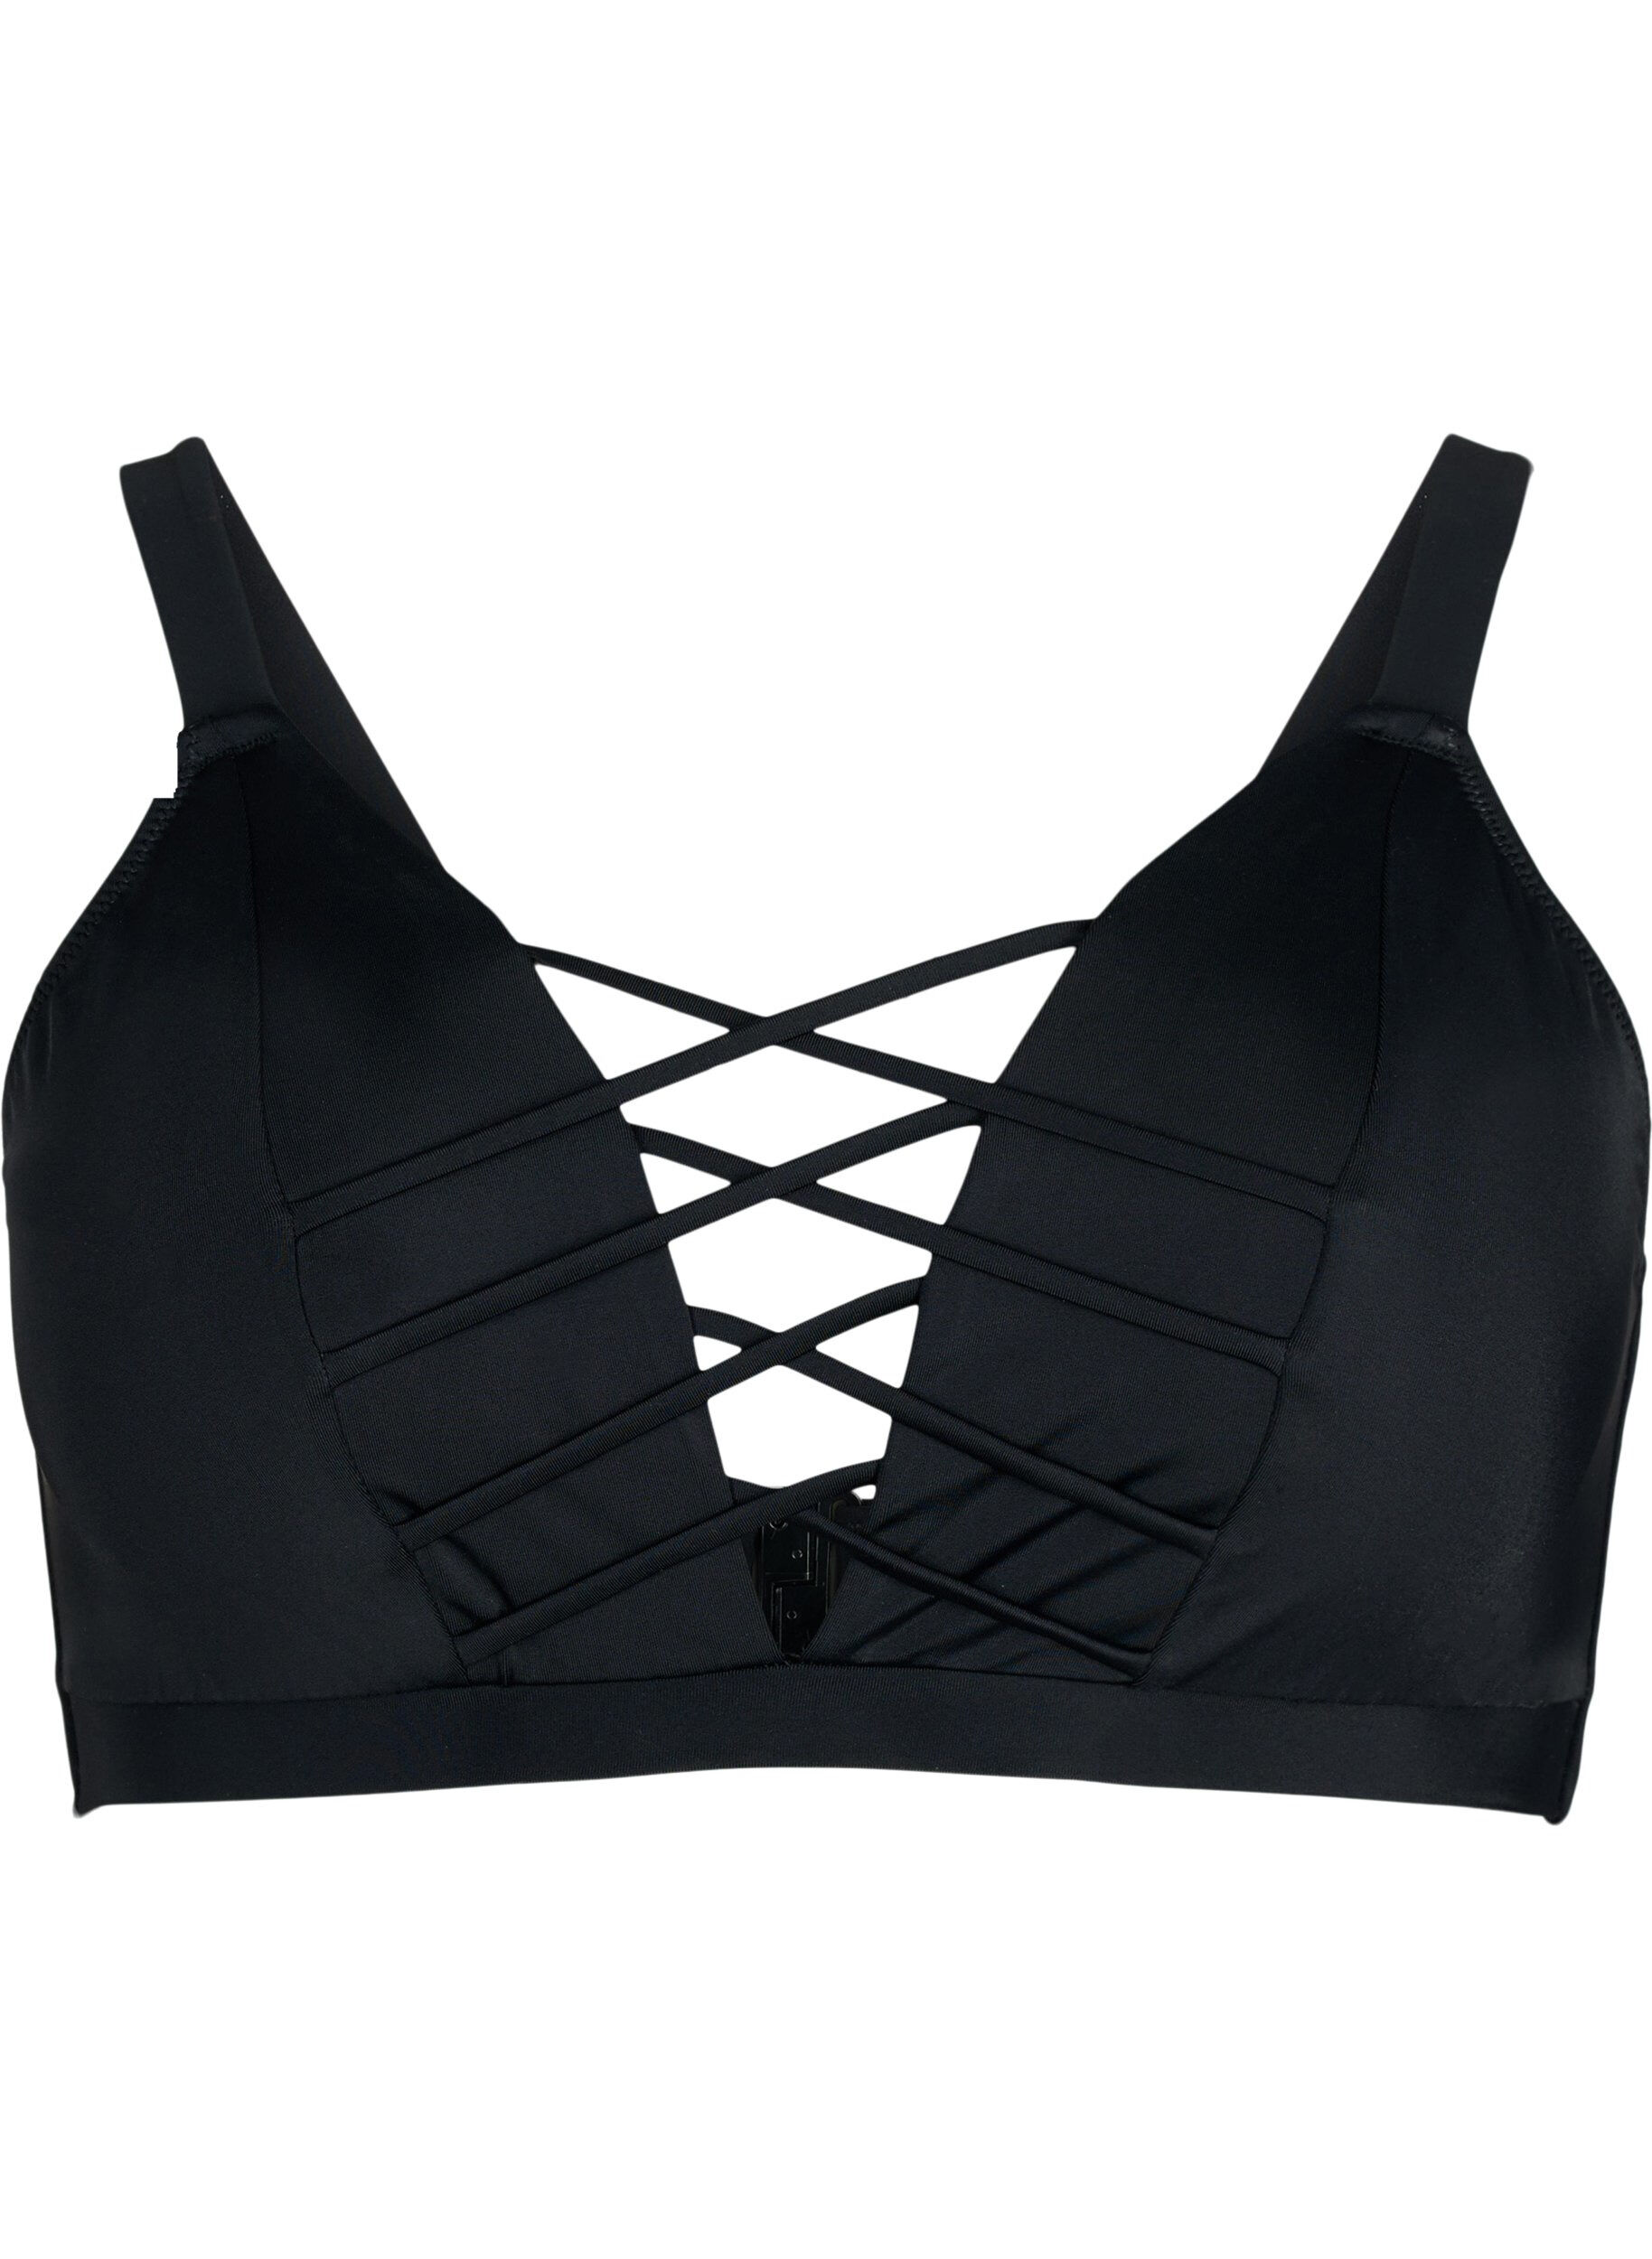 Bikini top with string detail - Black - Sz. 42-60 - Zizzifashion